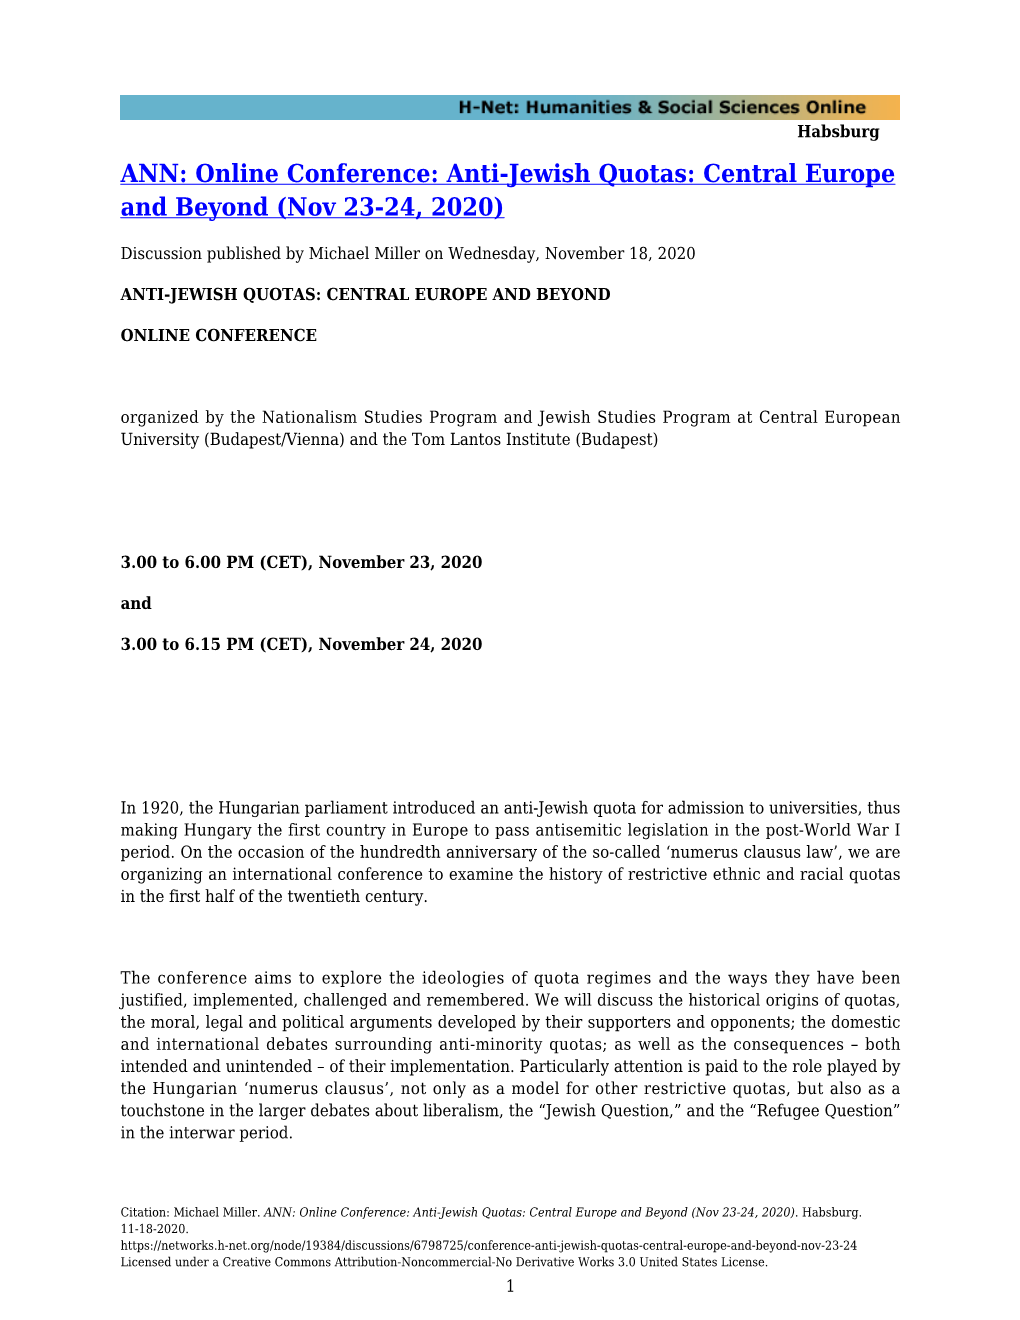 Anti-Jewish Quotas: Central Europe and Beyond (Nov 23-24, 2020)